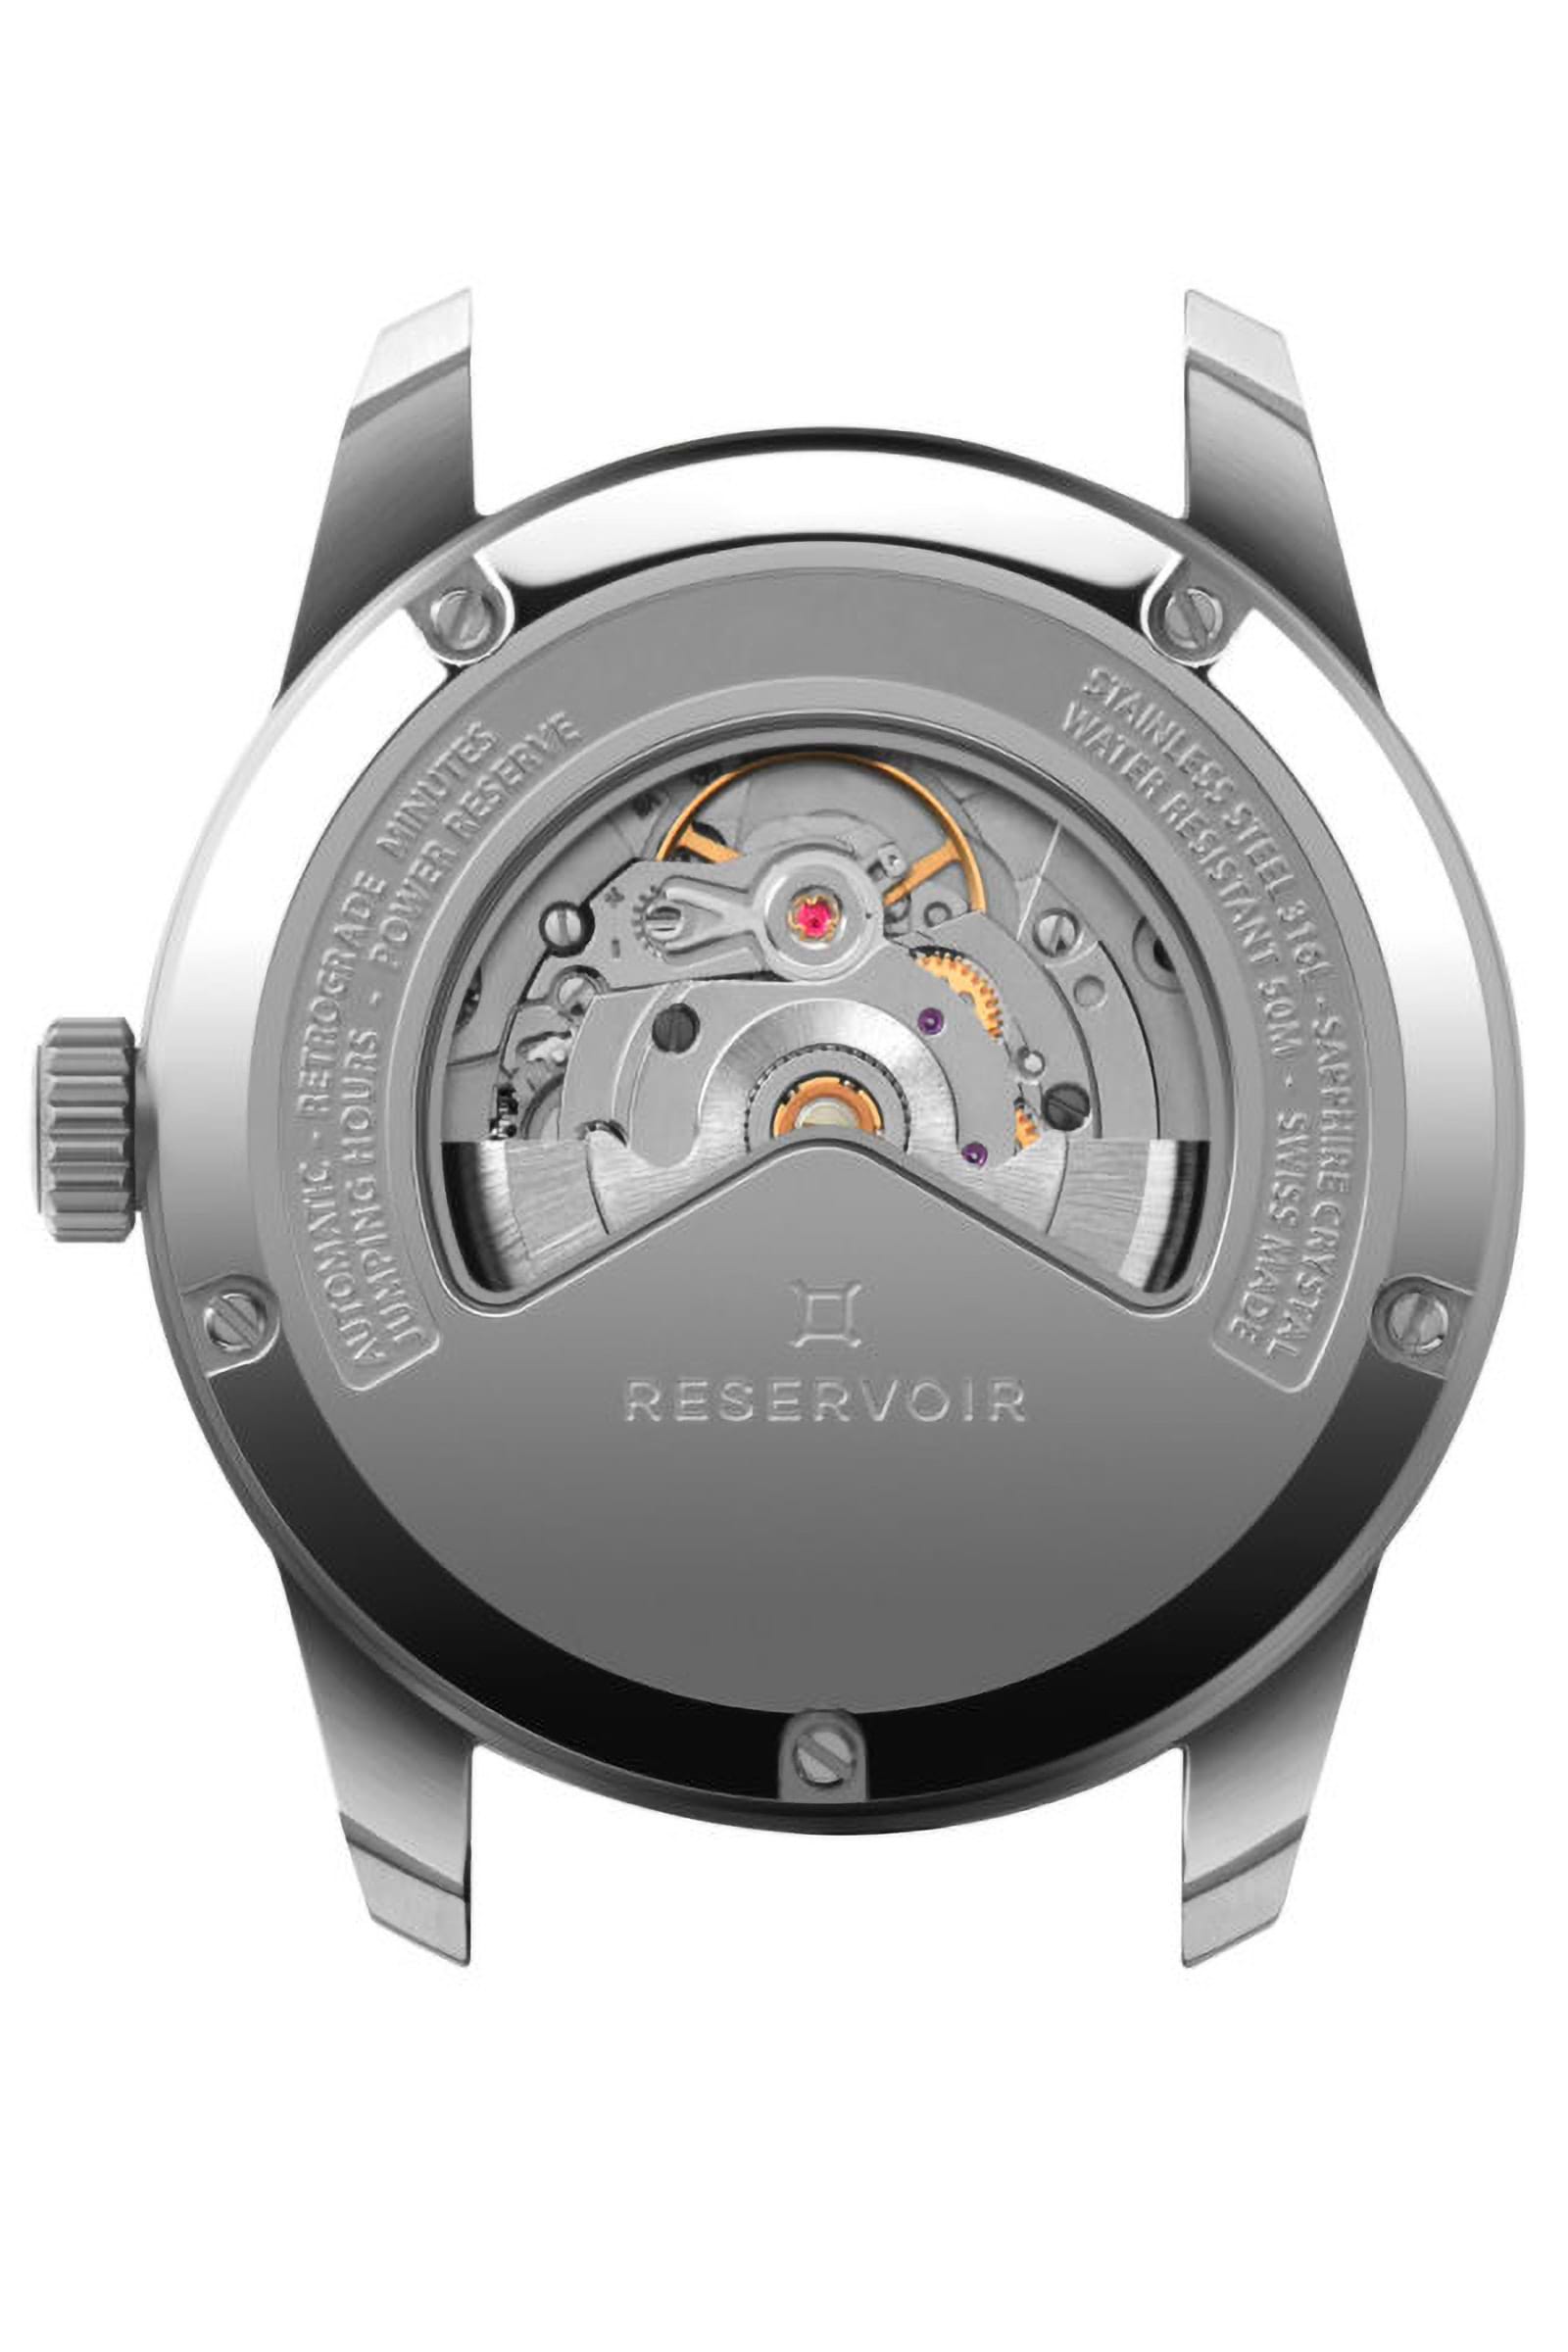 Media editorial of luxury RESERVOIR watch in light grey, black and dark grey